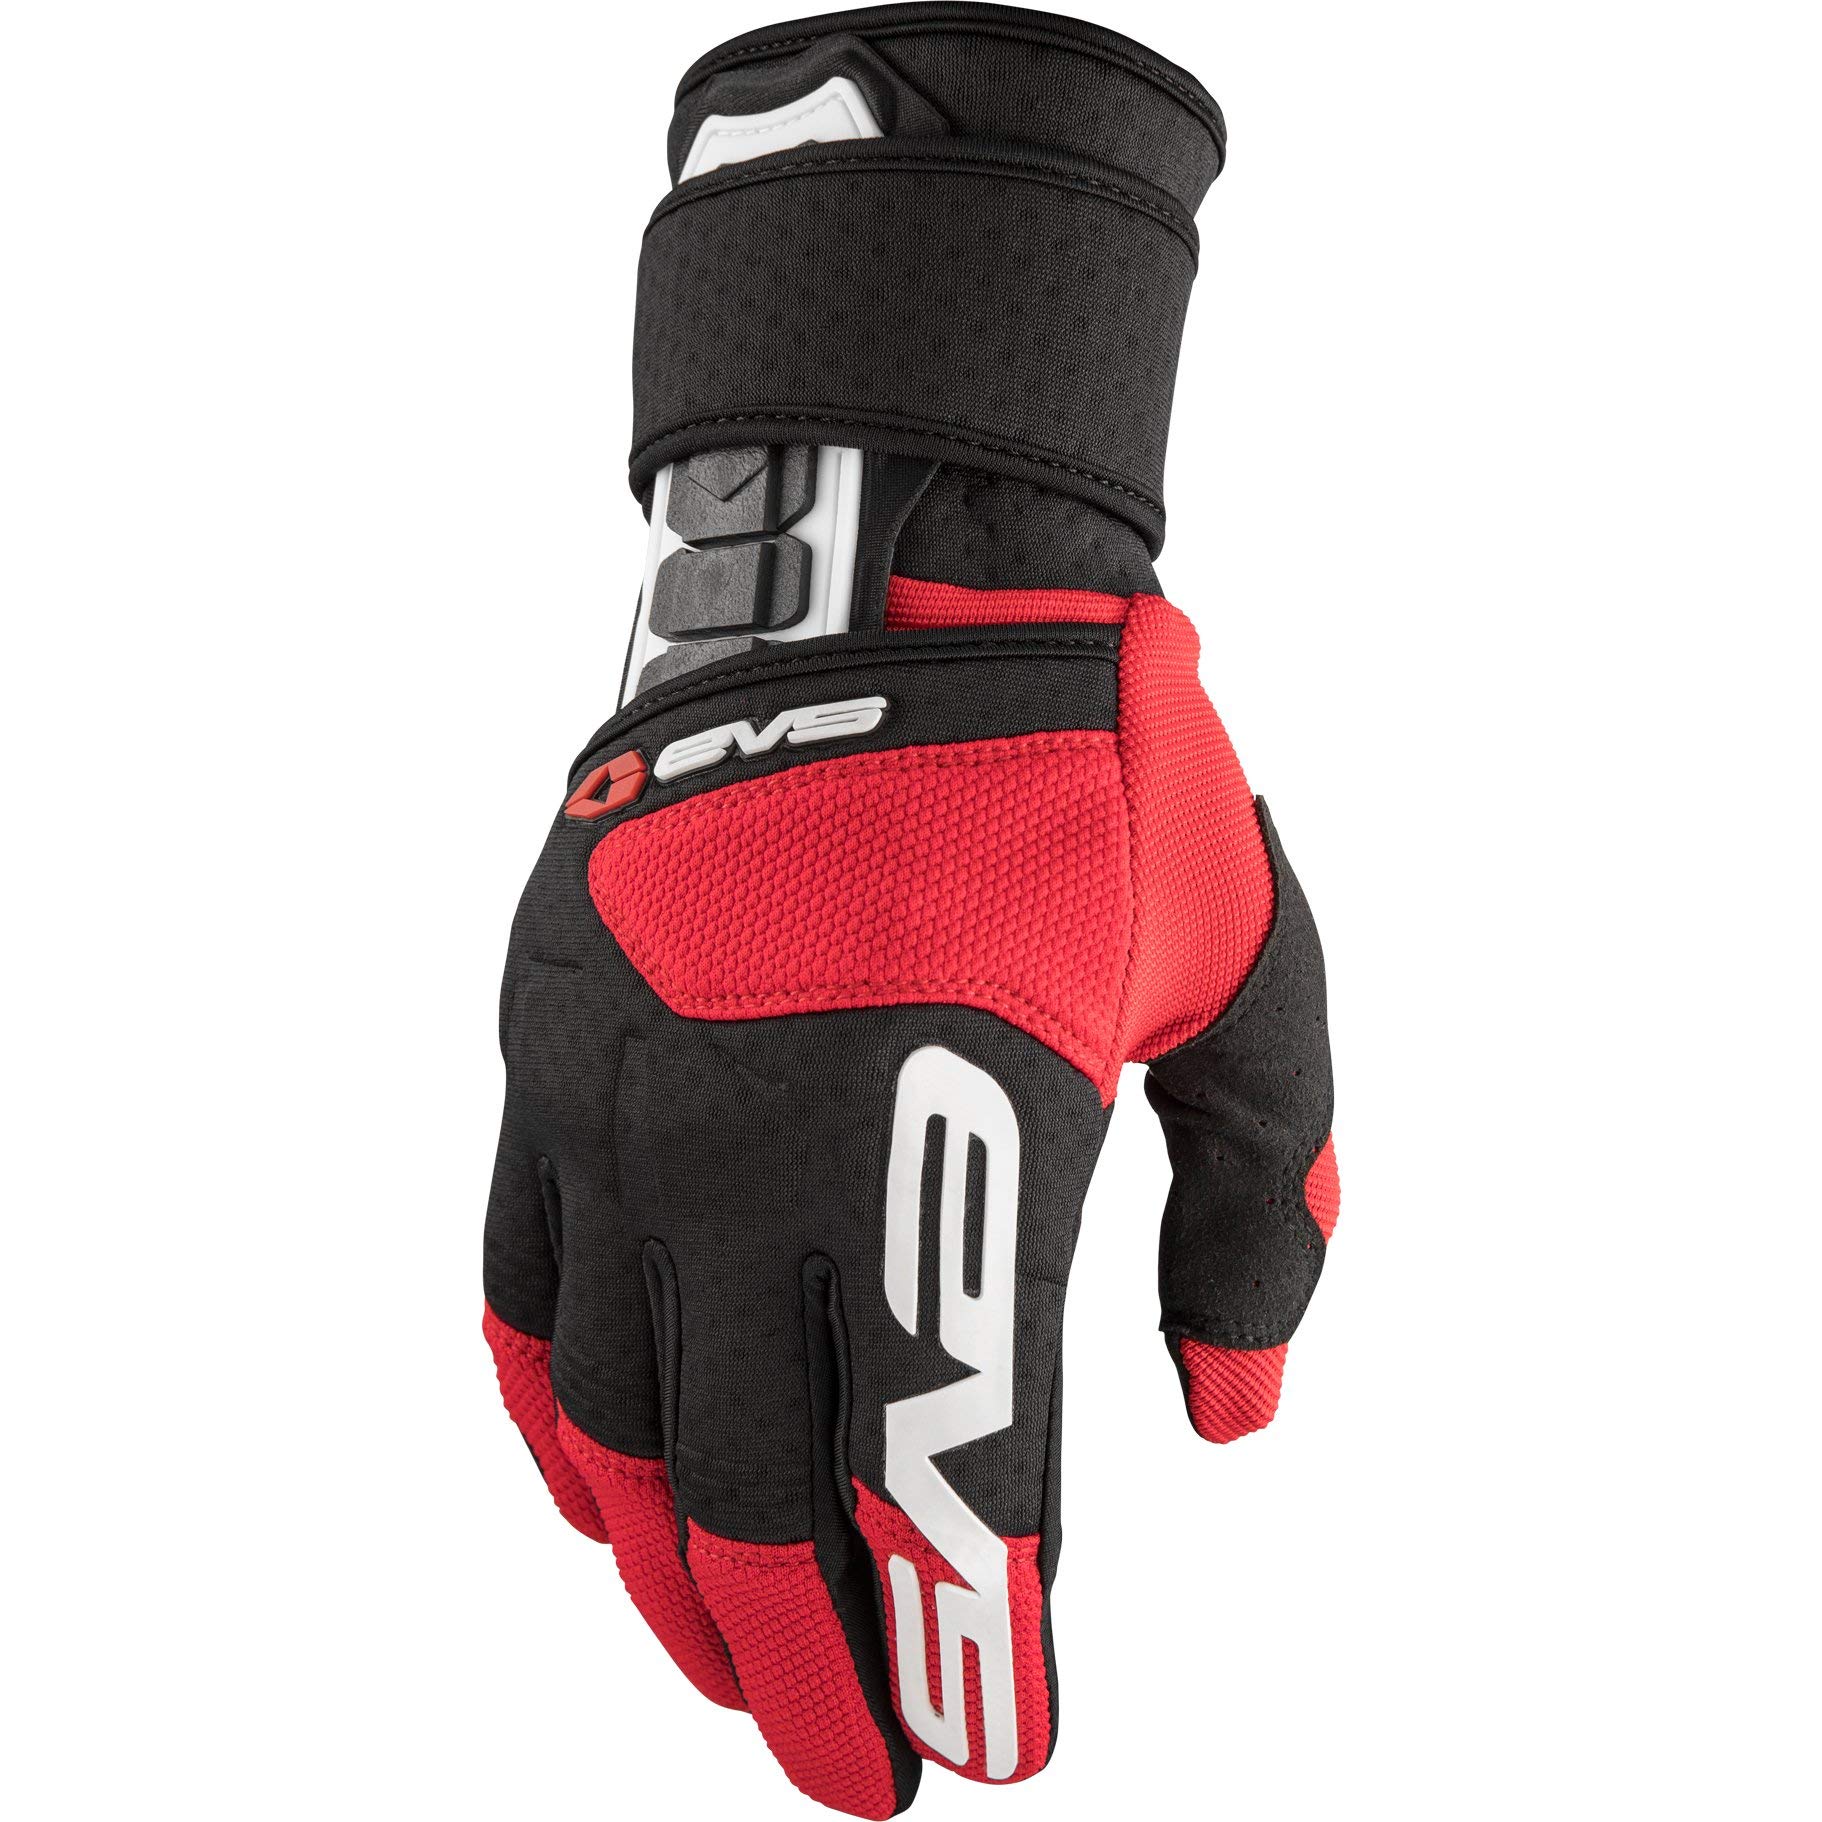 EVS Sports Wrister Glove with Wrist Protection, Adult, Black, Größe small von EVS Sports